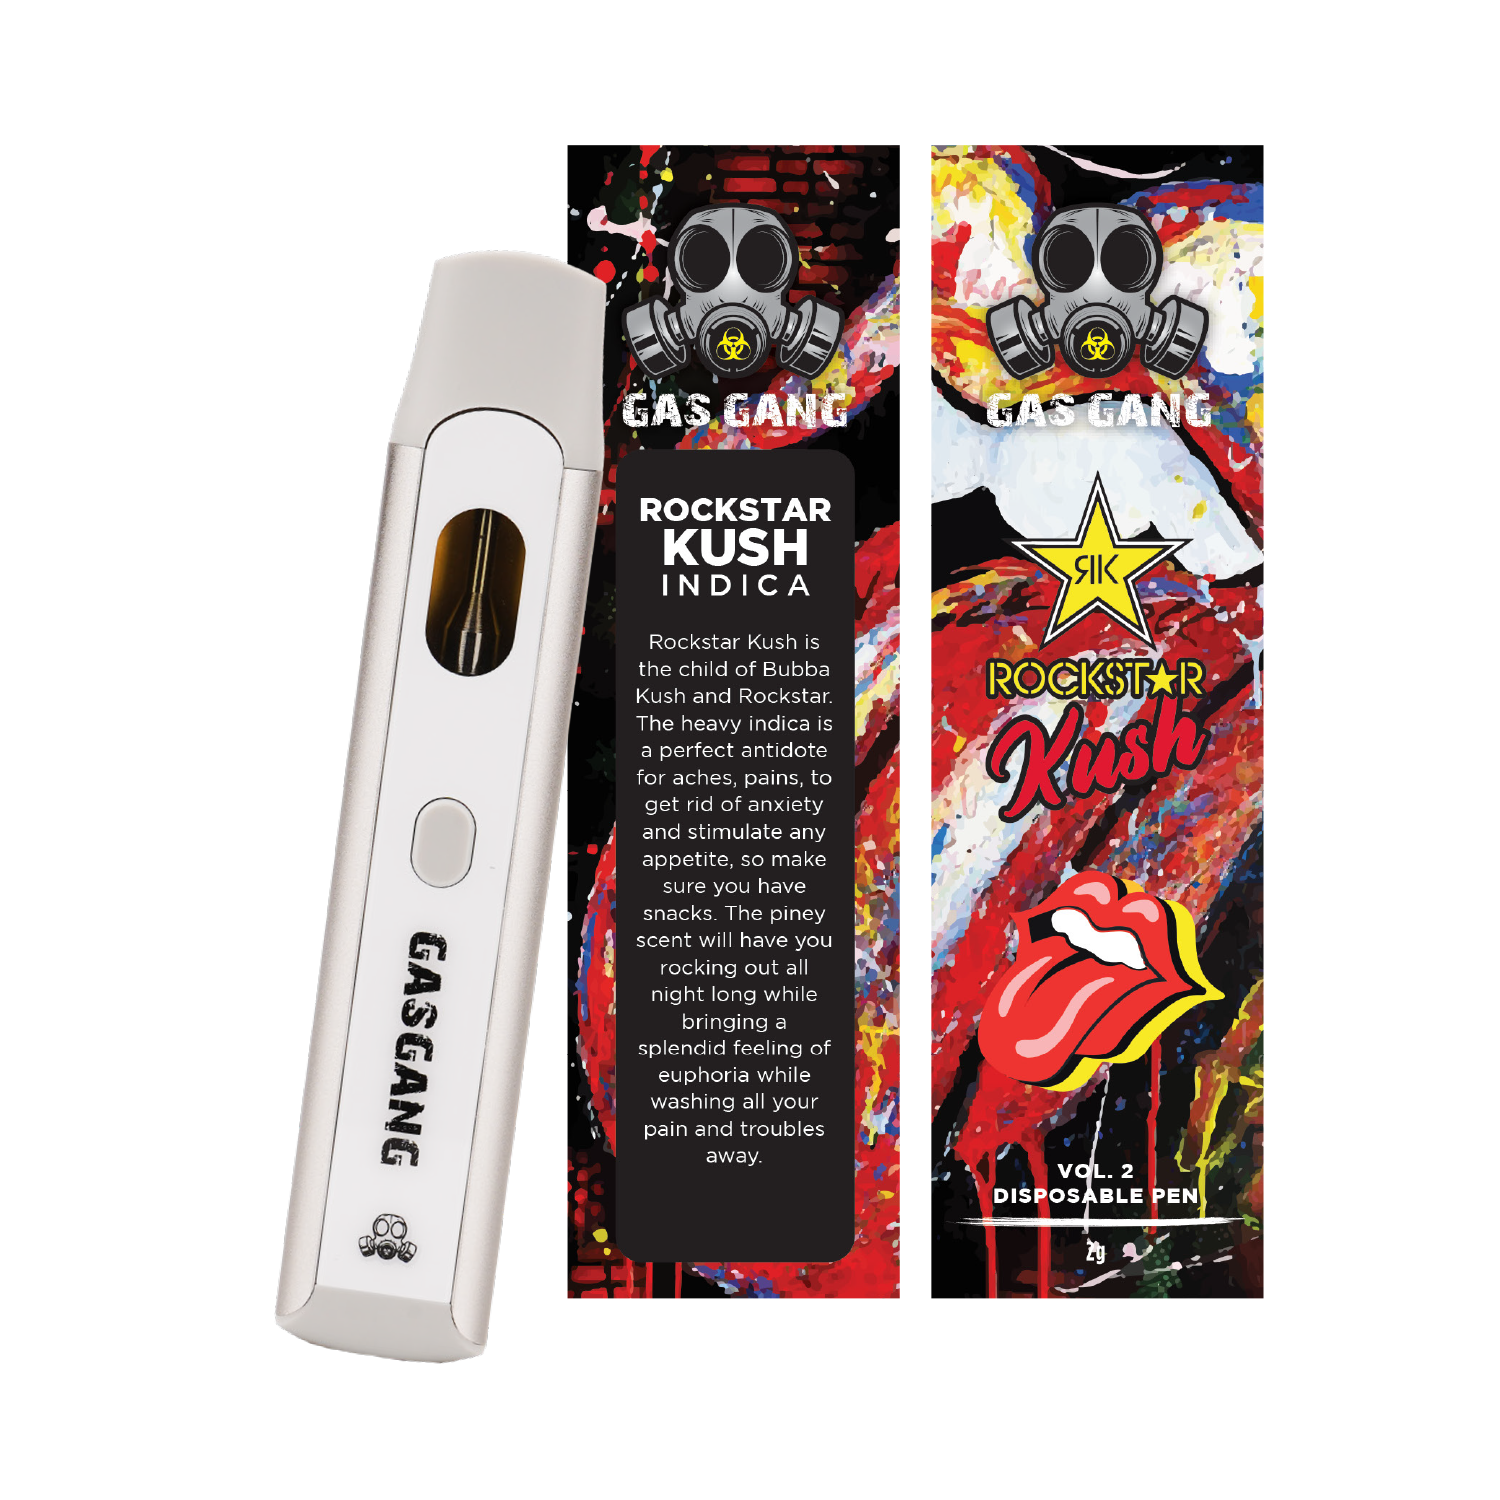 Buy Gas Gang - Rockstar Kush Disposable Pen at BudExpressNOW Online Shop.